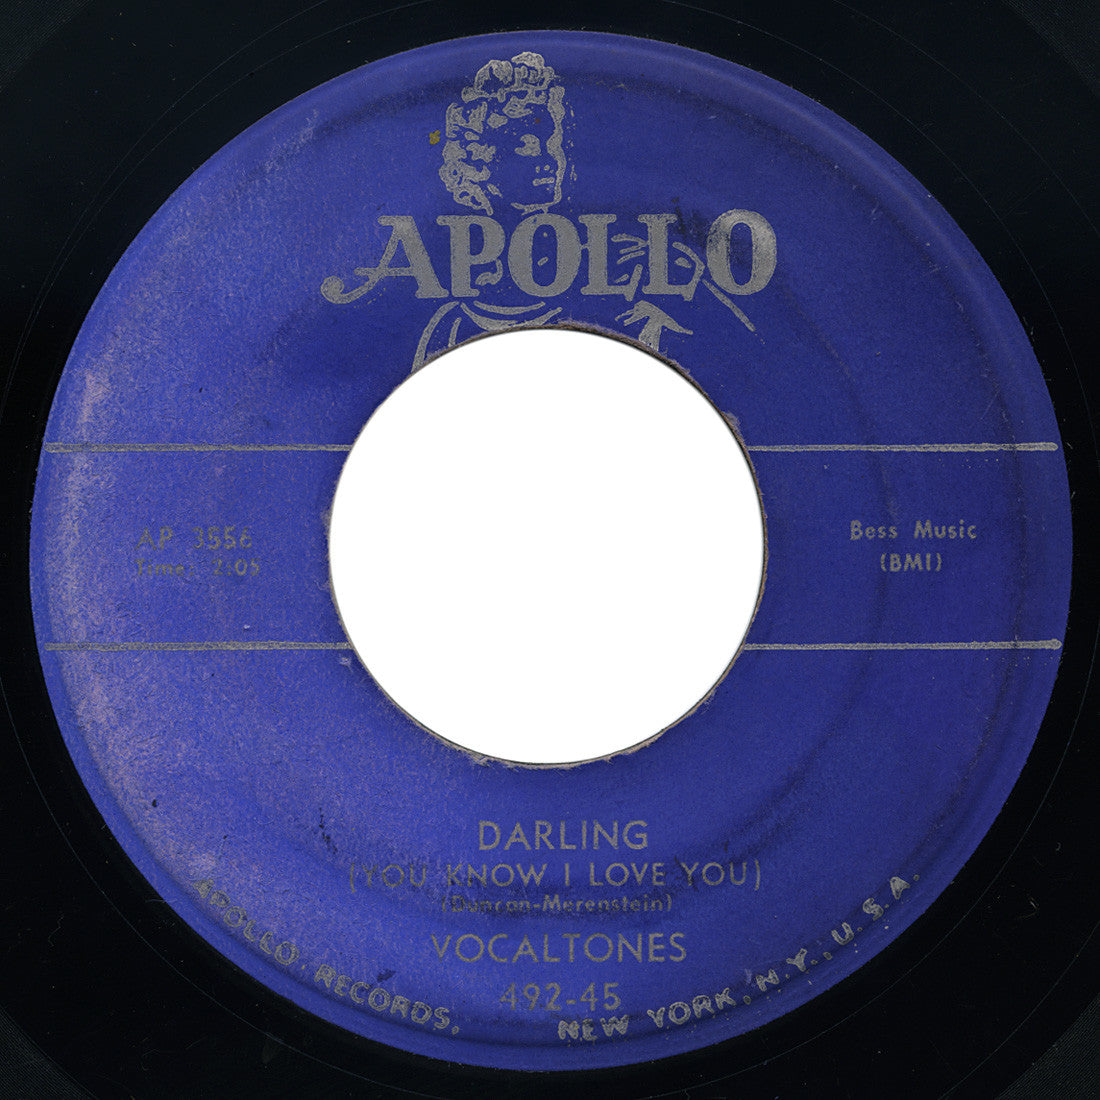 Vocaltones – Darling (You Know I Love You) – Apollo